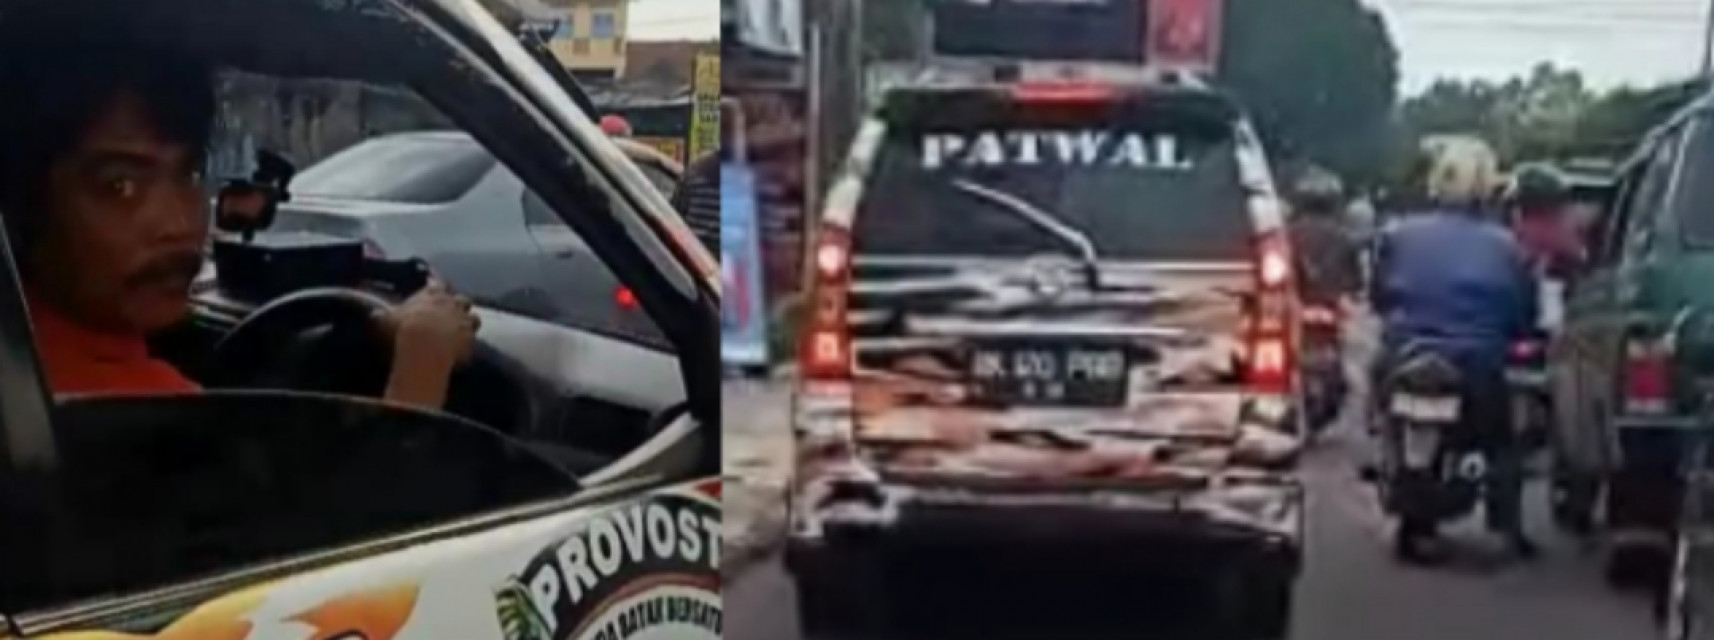 Mobil Sipil Bercat Loreng Ormas Pakai Rotator dan Sirine Terjebak Macet di Kota Siantar, \'Bos Jangan Arogan\'!!